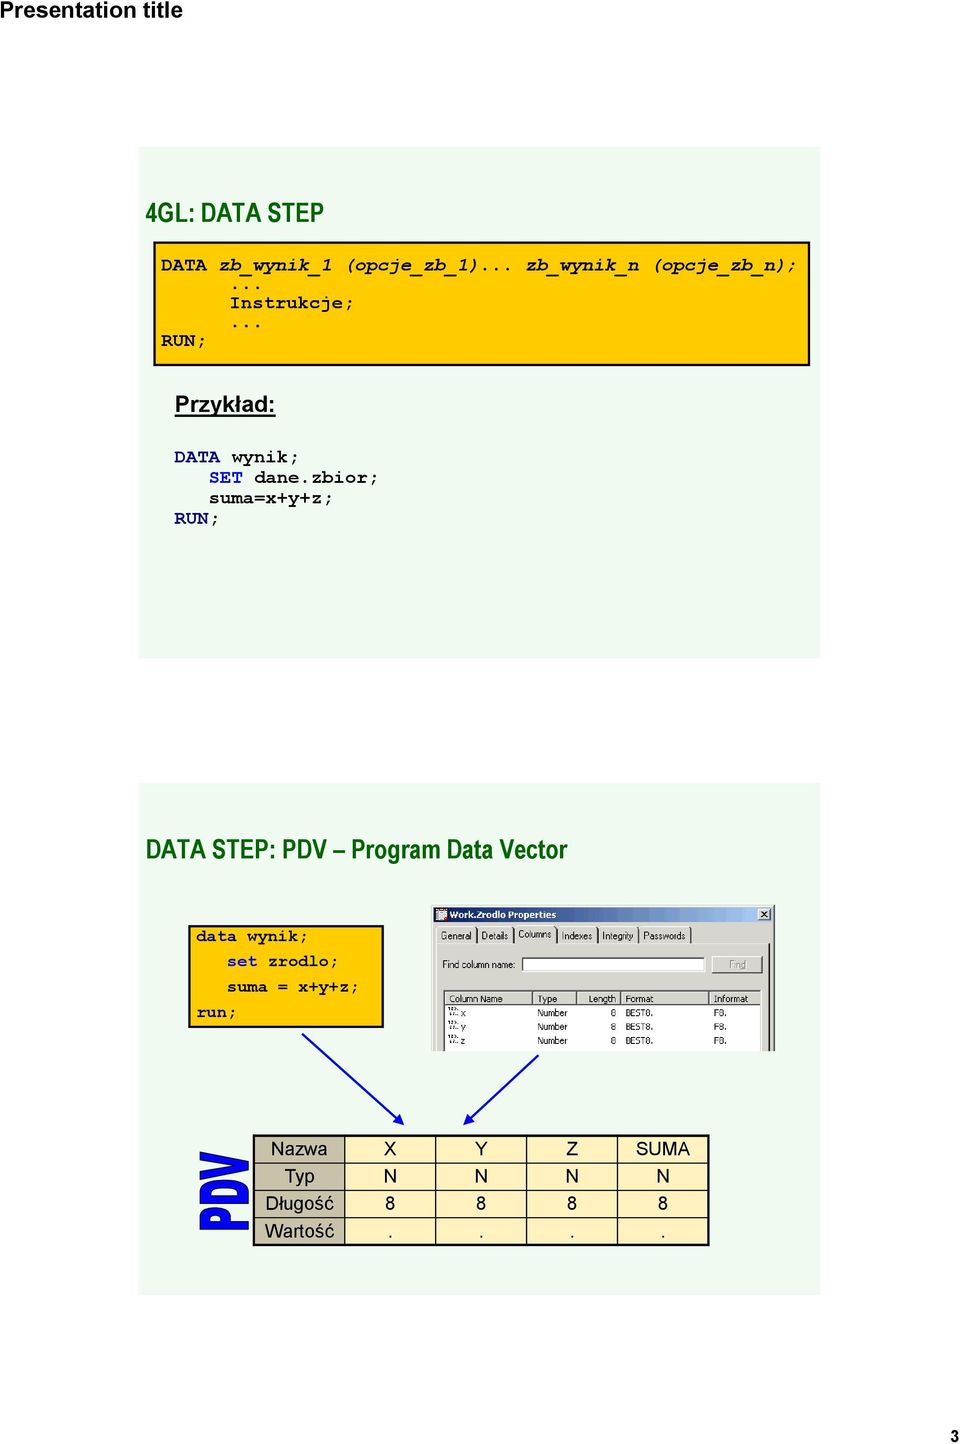 zbior; suma=x+y+z; DATA STEP: PDV Program Data Vector data wynik;